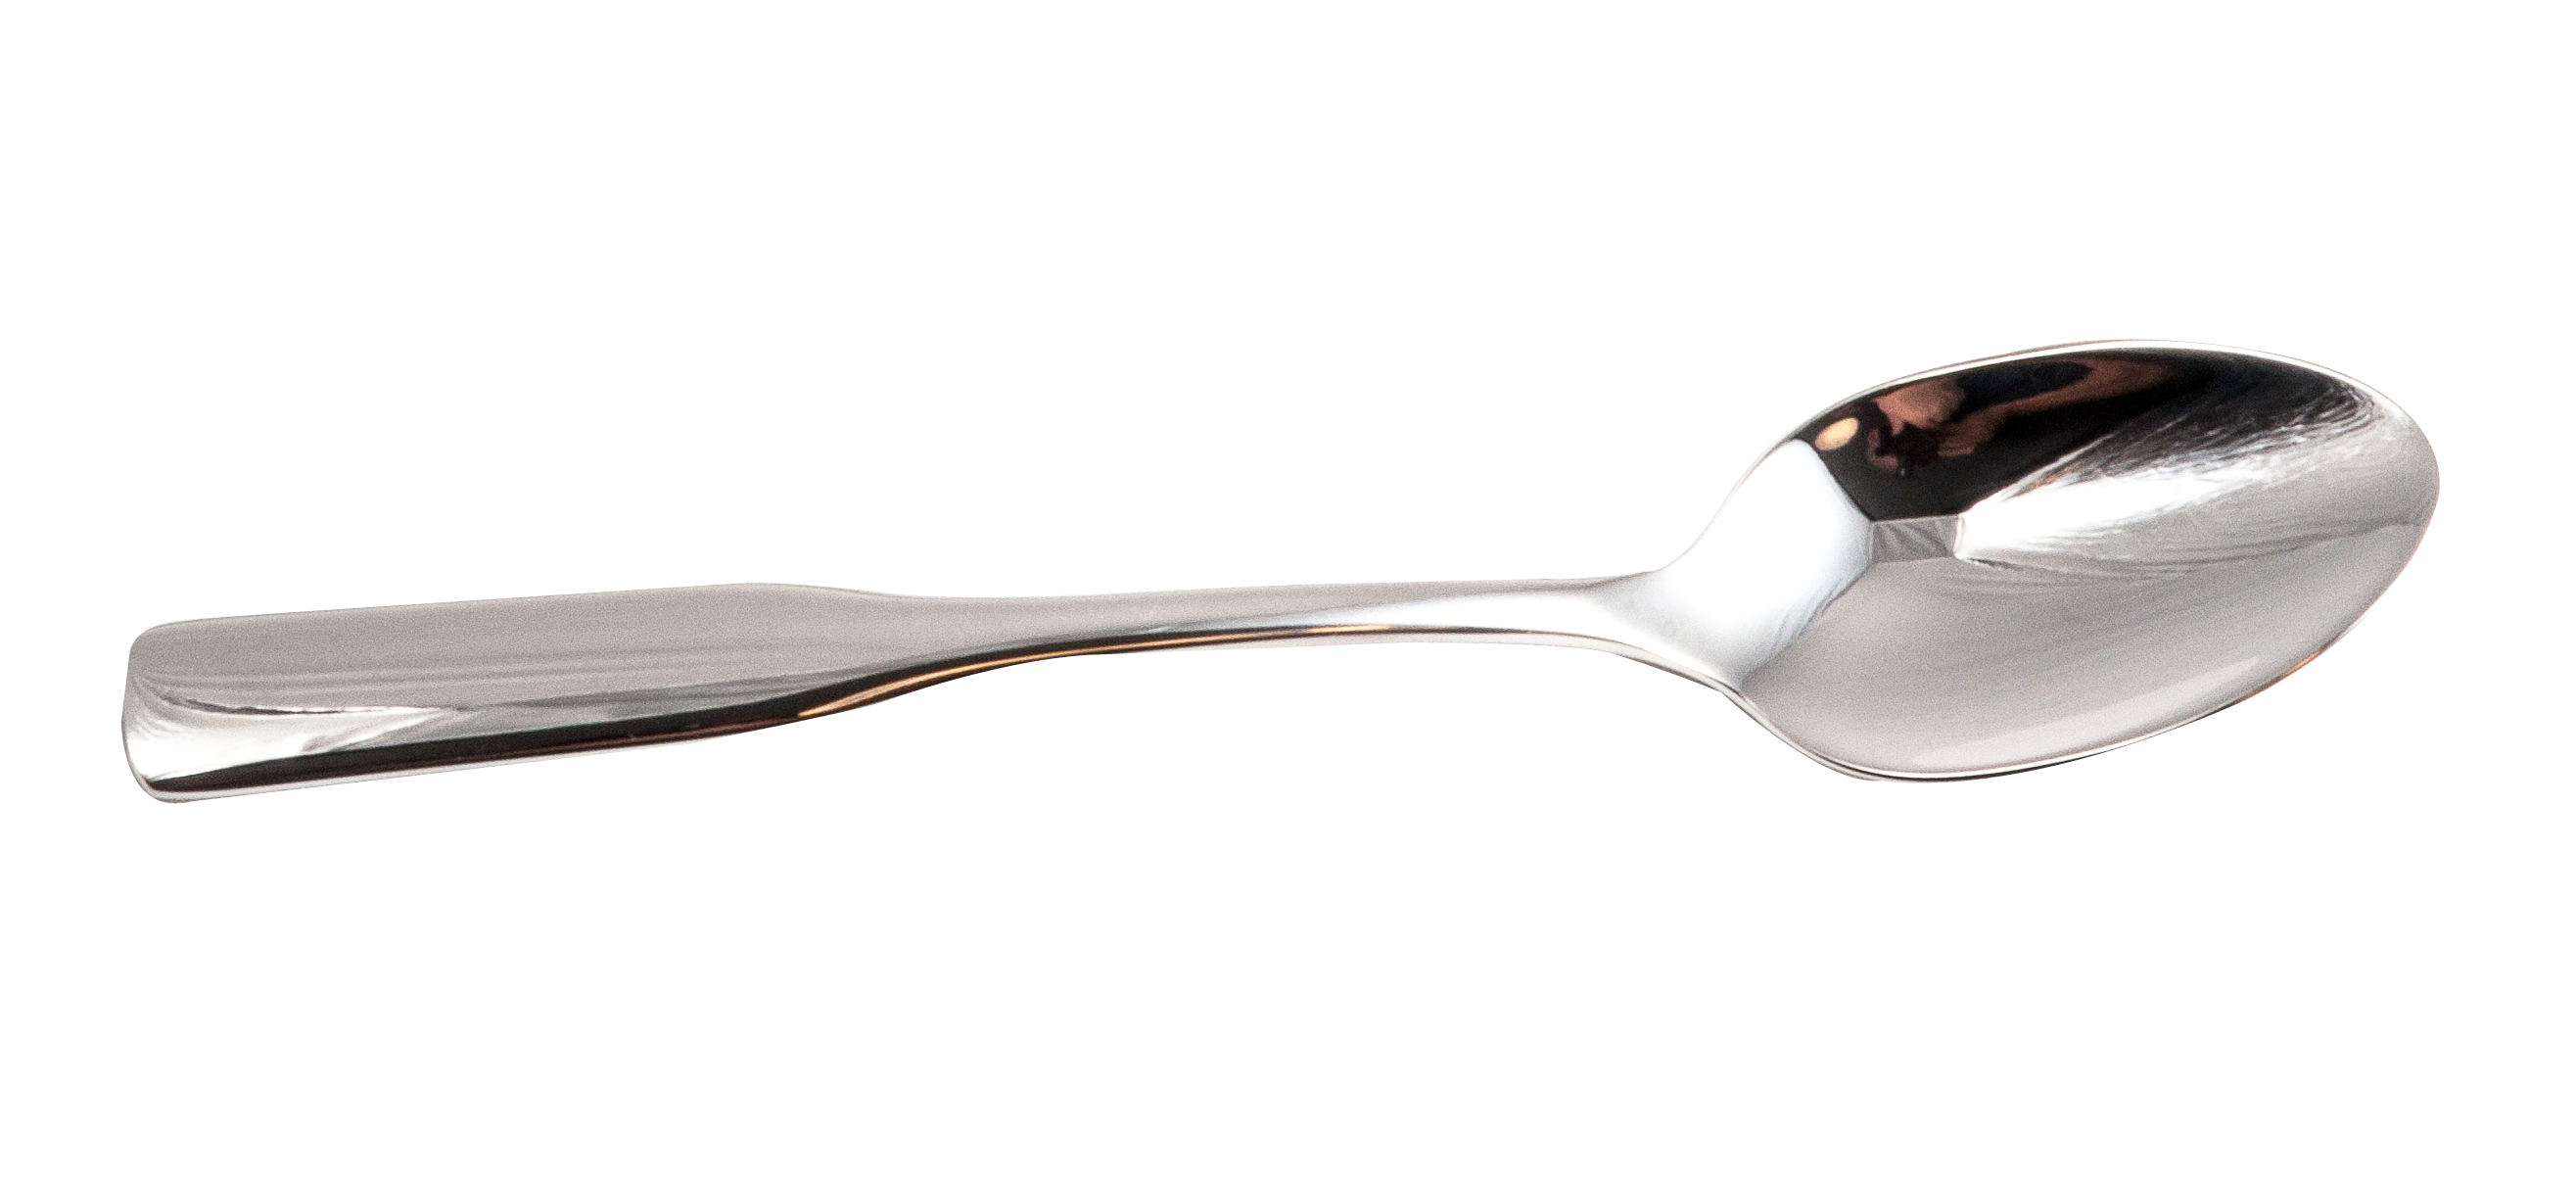 Spoon PNG HD - 131956